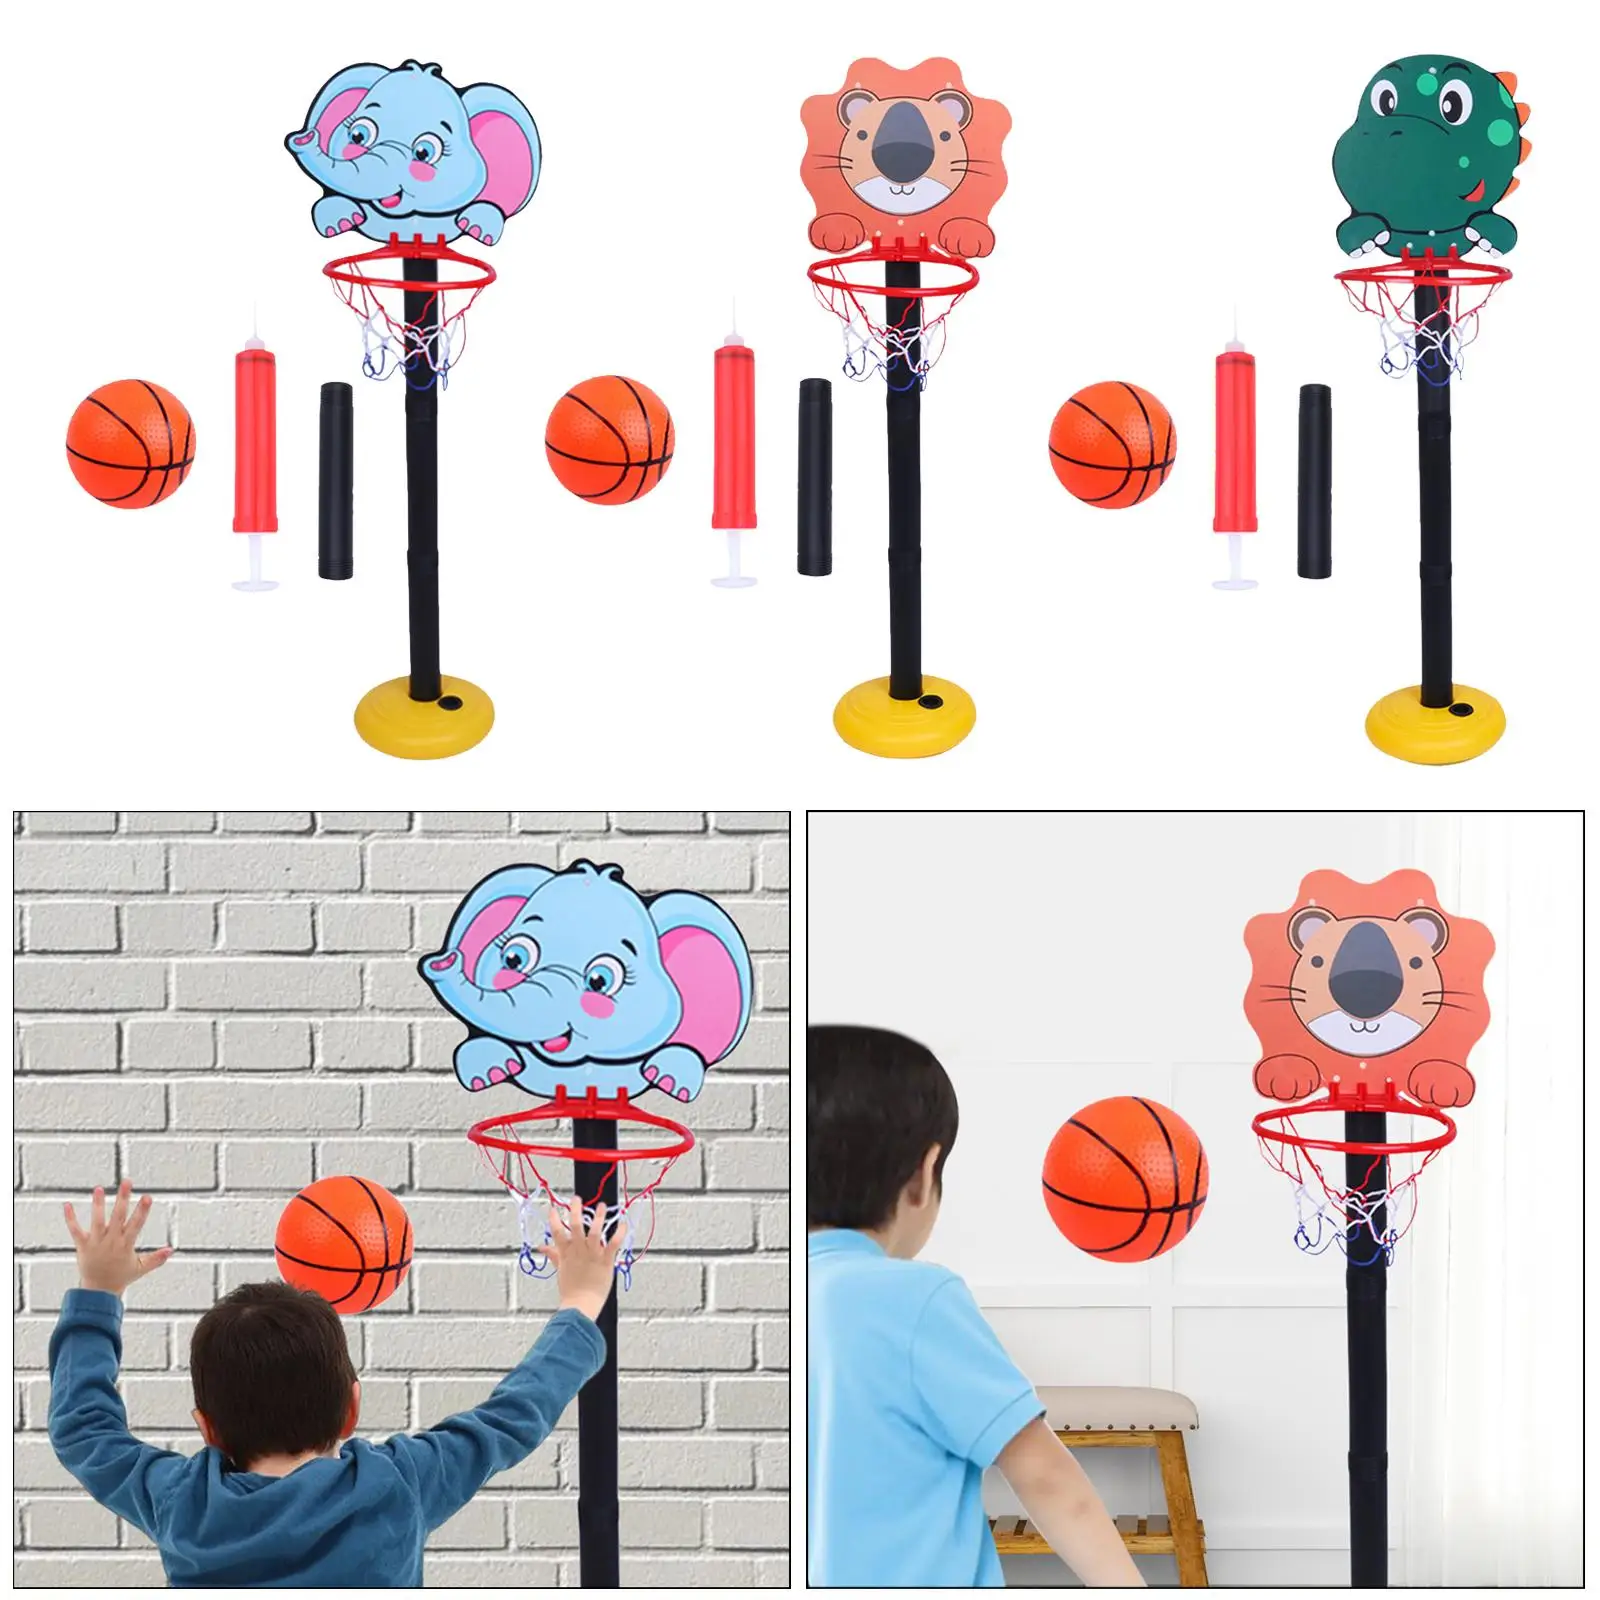 Basketball Hoop Set Playing sport Toys for Office Door Bathroom Courtyard Outdoor